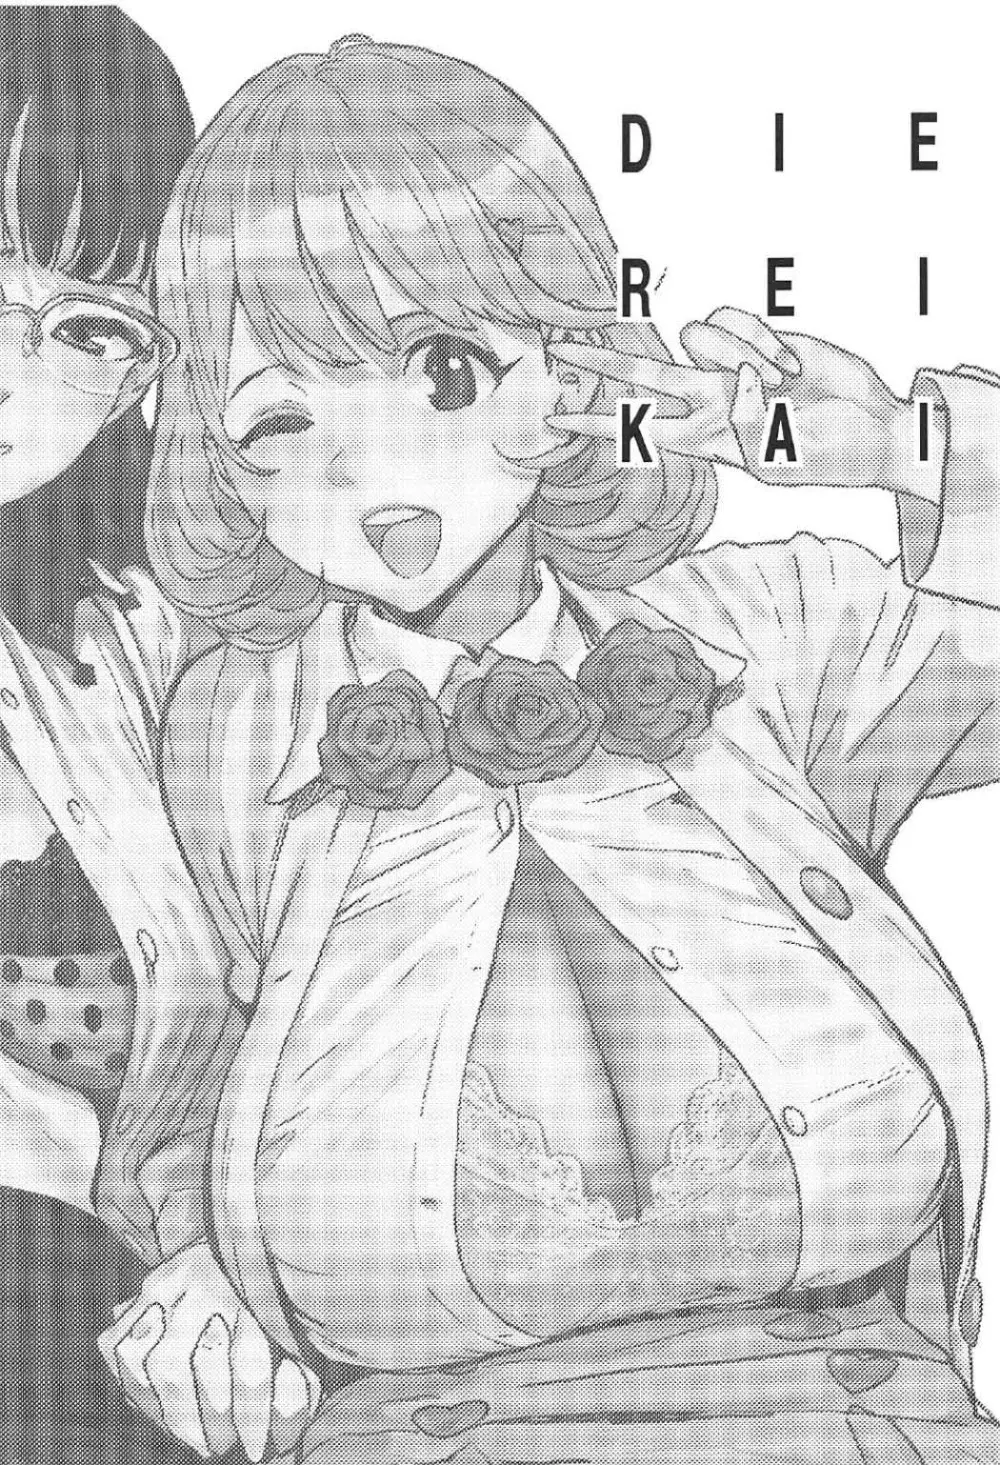 DIE REI KAI - page2